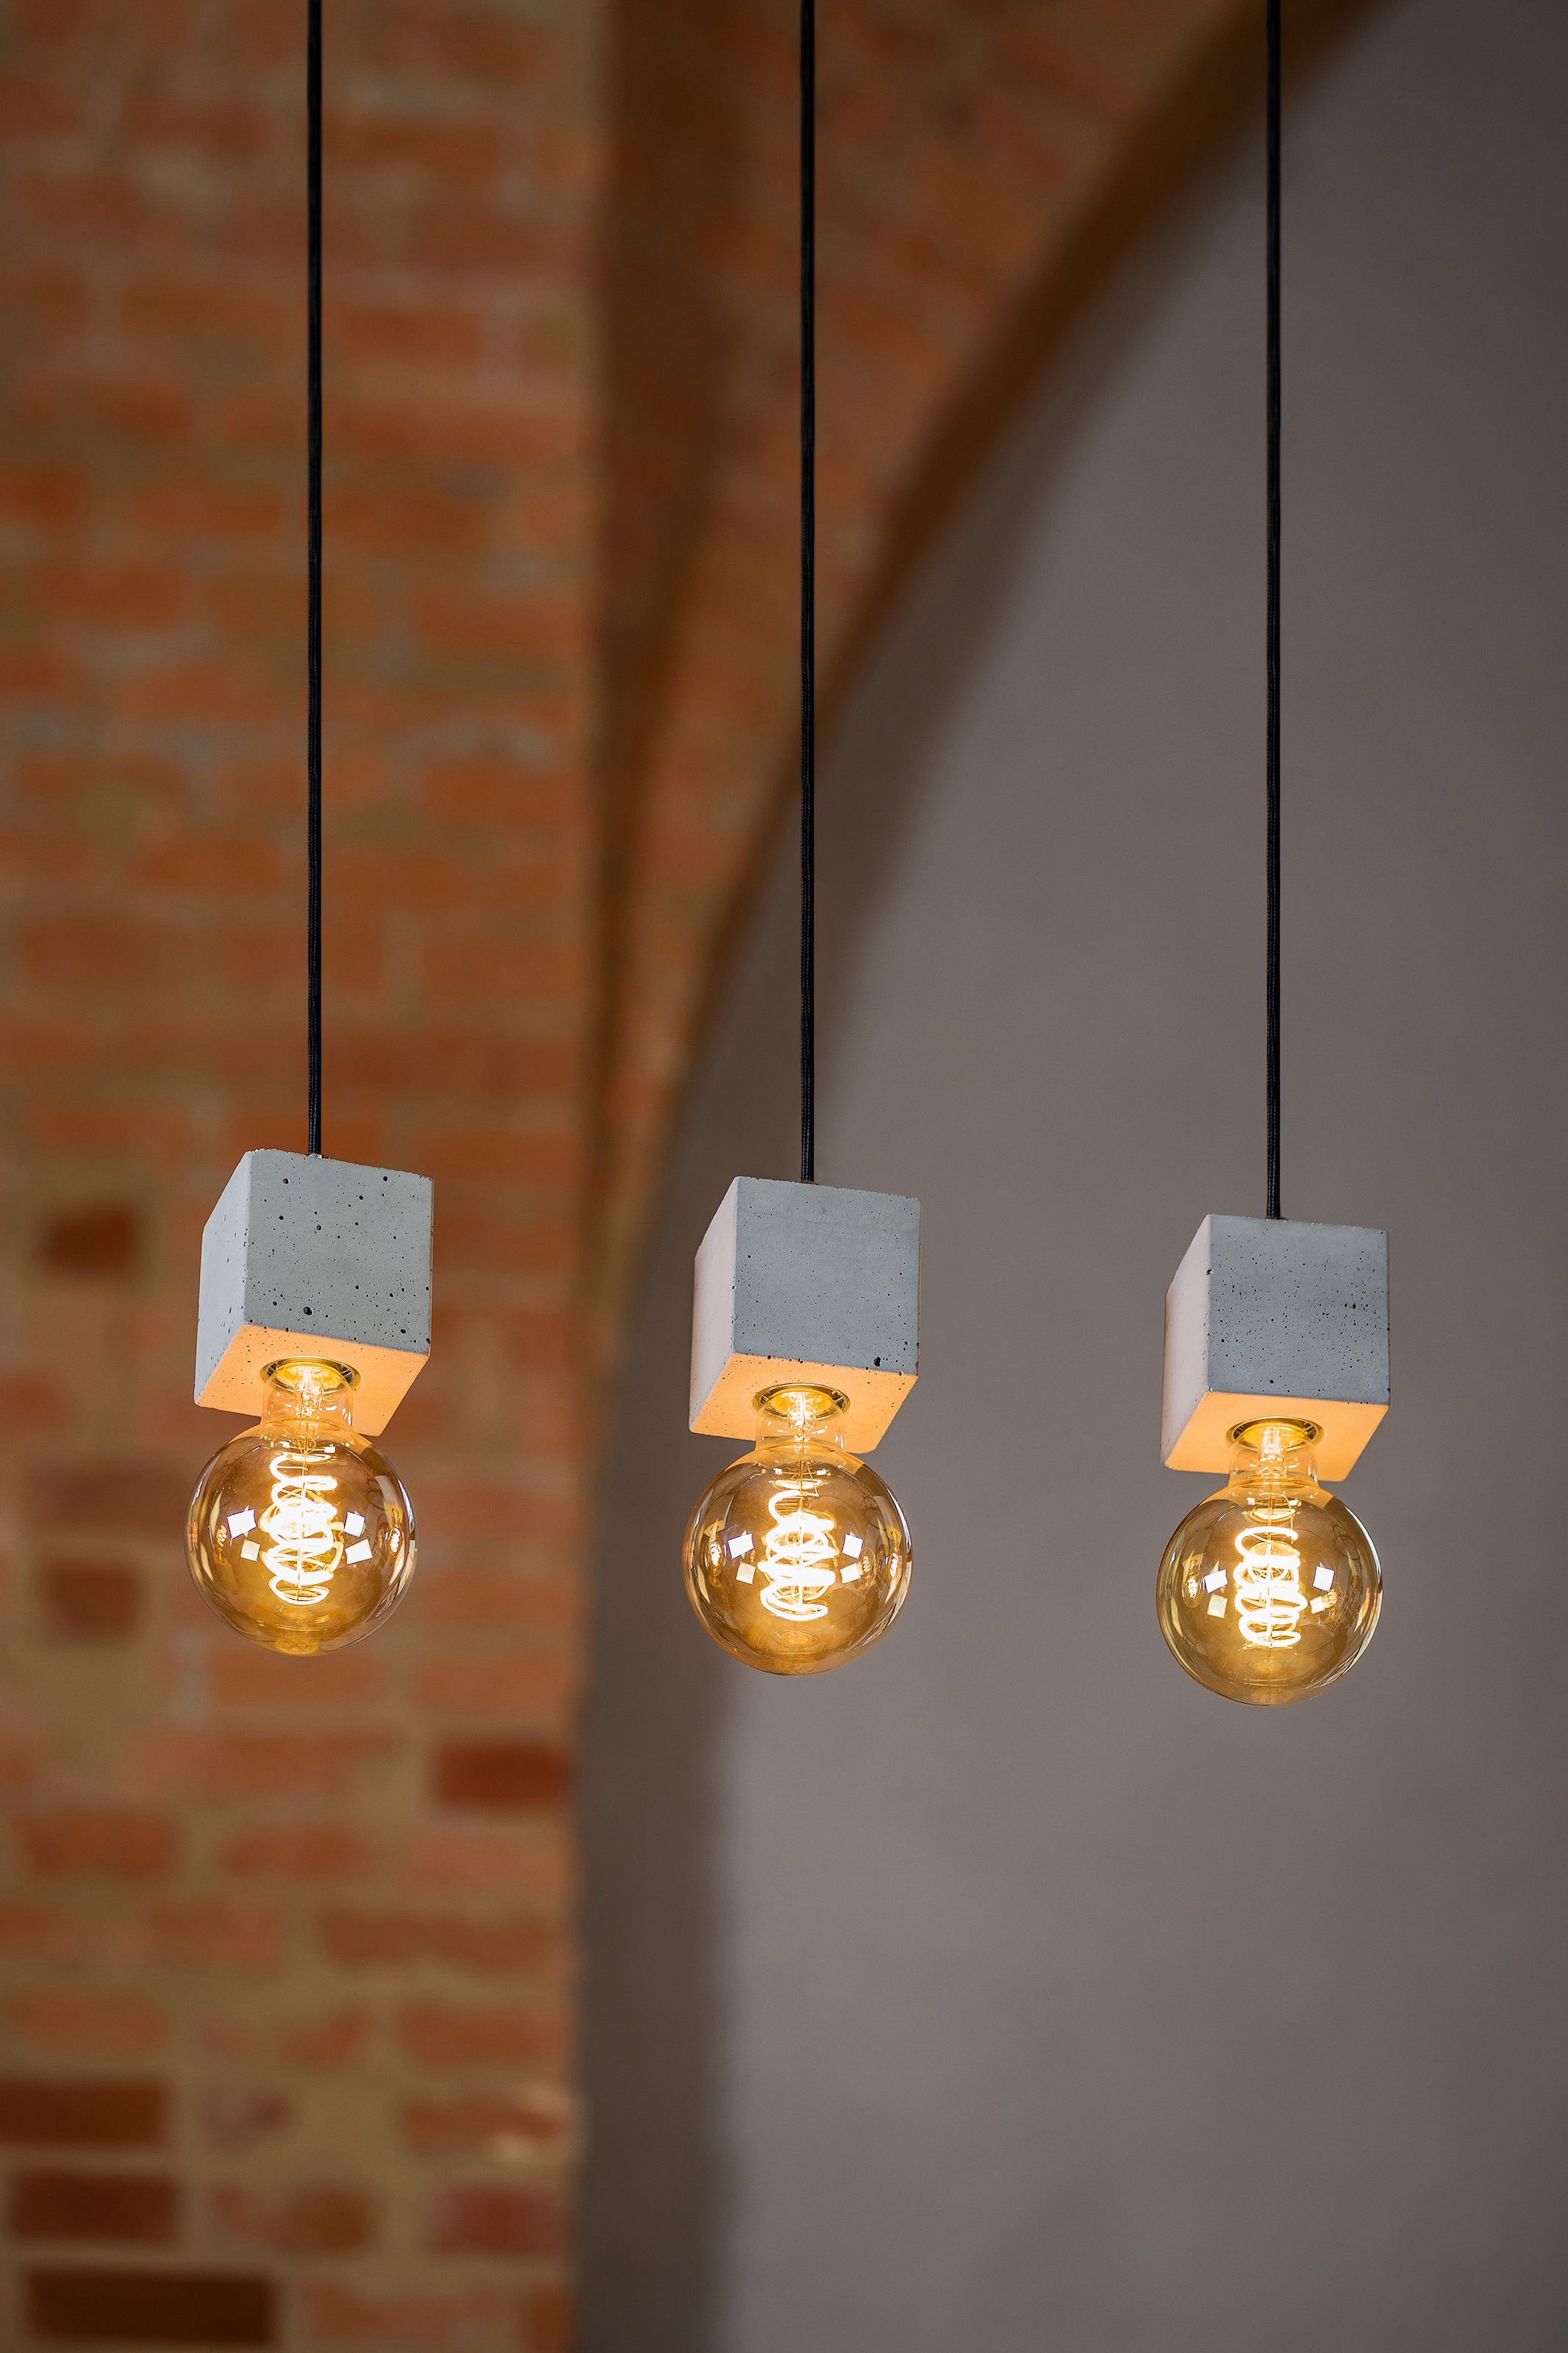 SPOT Light LED-Filament »LED-Leuchtmittel«, E27, 3 St., Extra-Warmweiß,  ausgezeichnete Lichteffizienz, extra-warmweiß, Vintage-Leuchtmittel auf  Raten kaufen